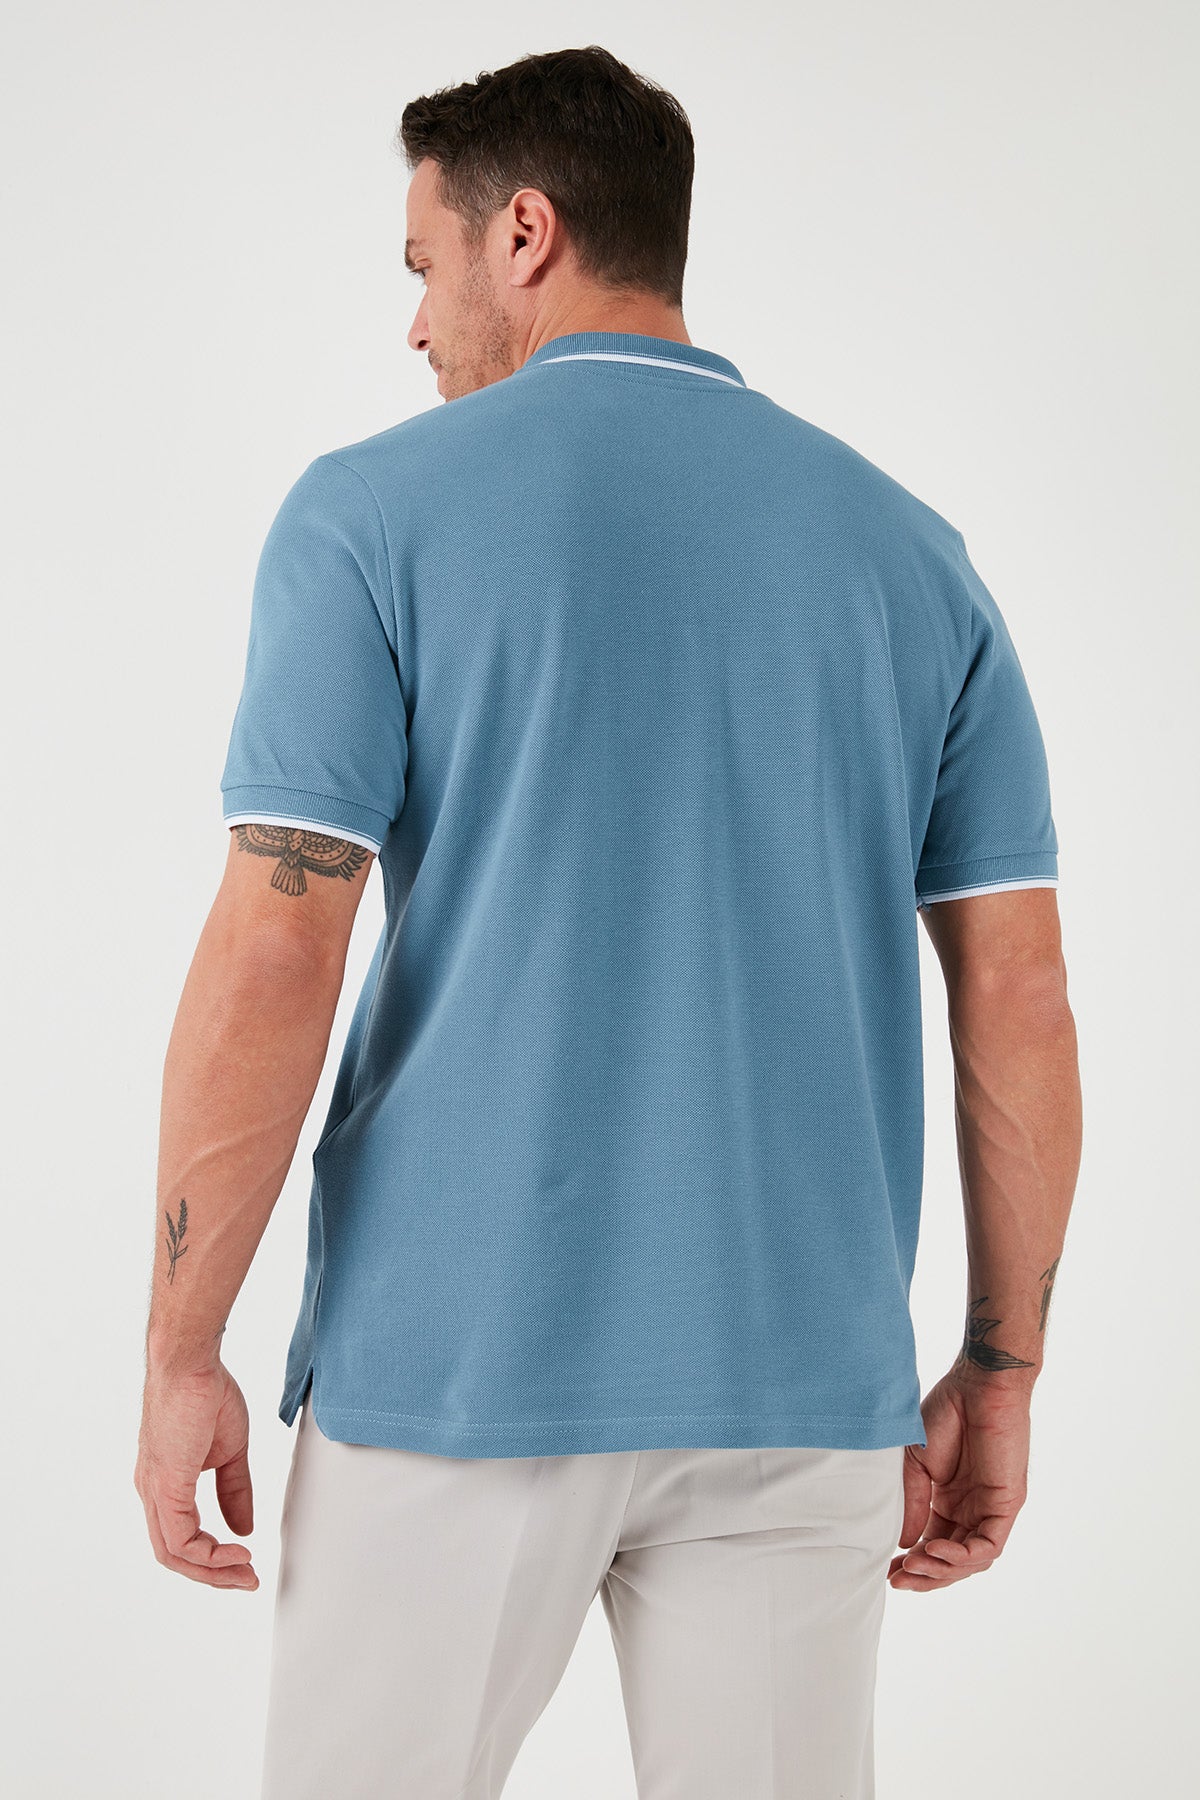 Buratti % 100 Pamuk Düğmeli Slim Fit Erkek Polo Yaka T Shirt 5902118 MAVİ